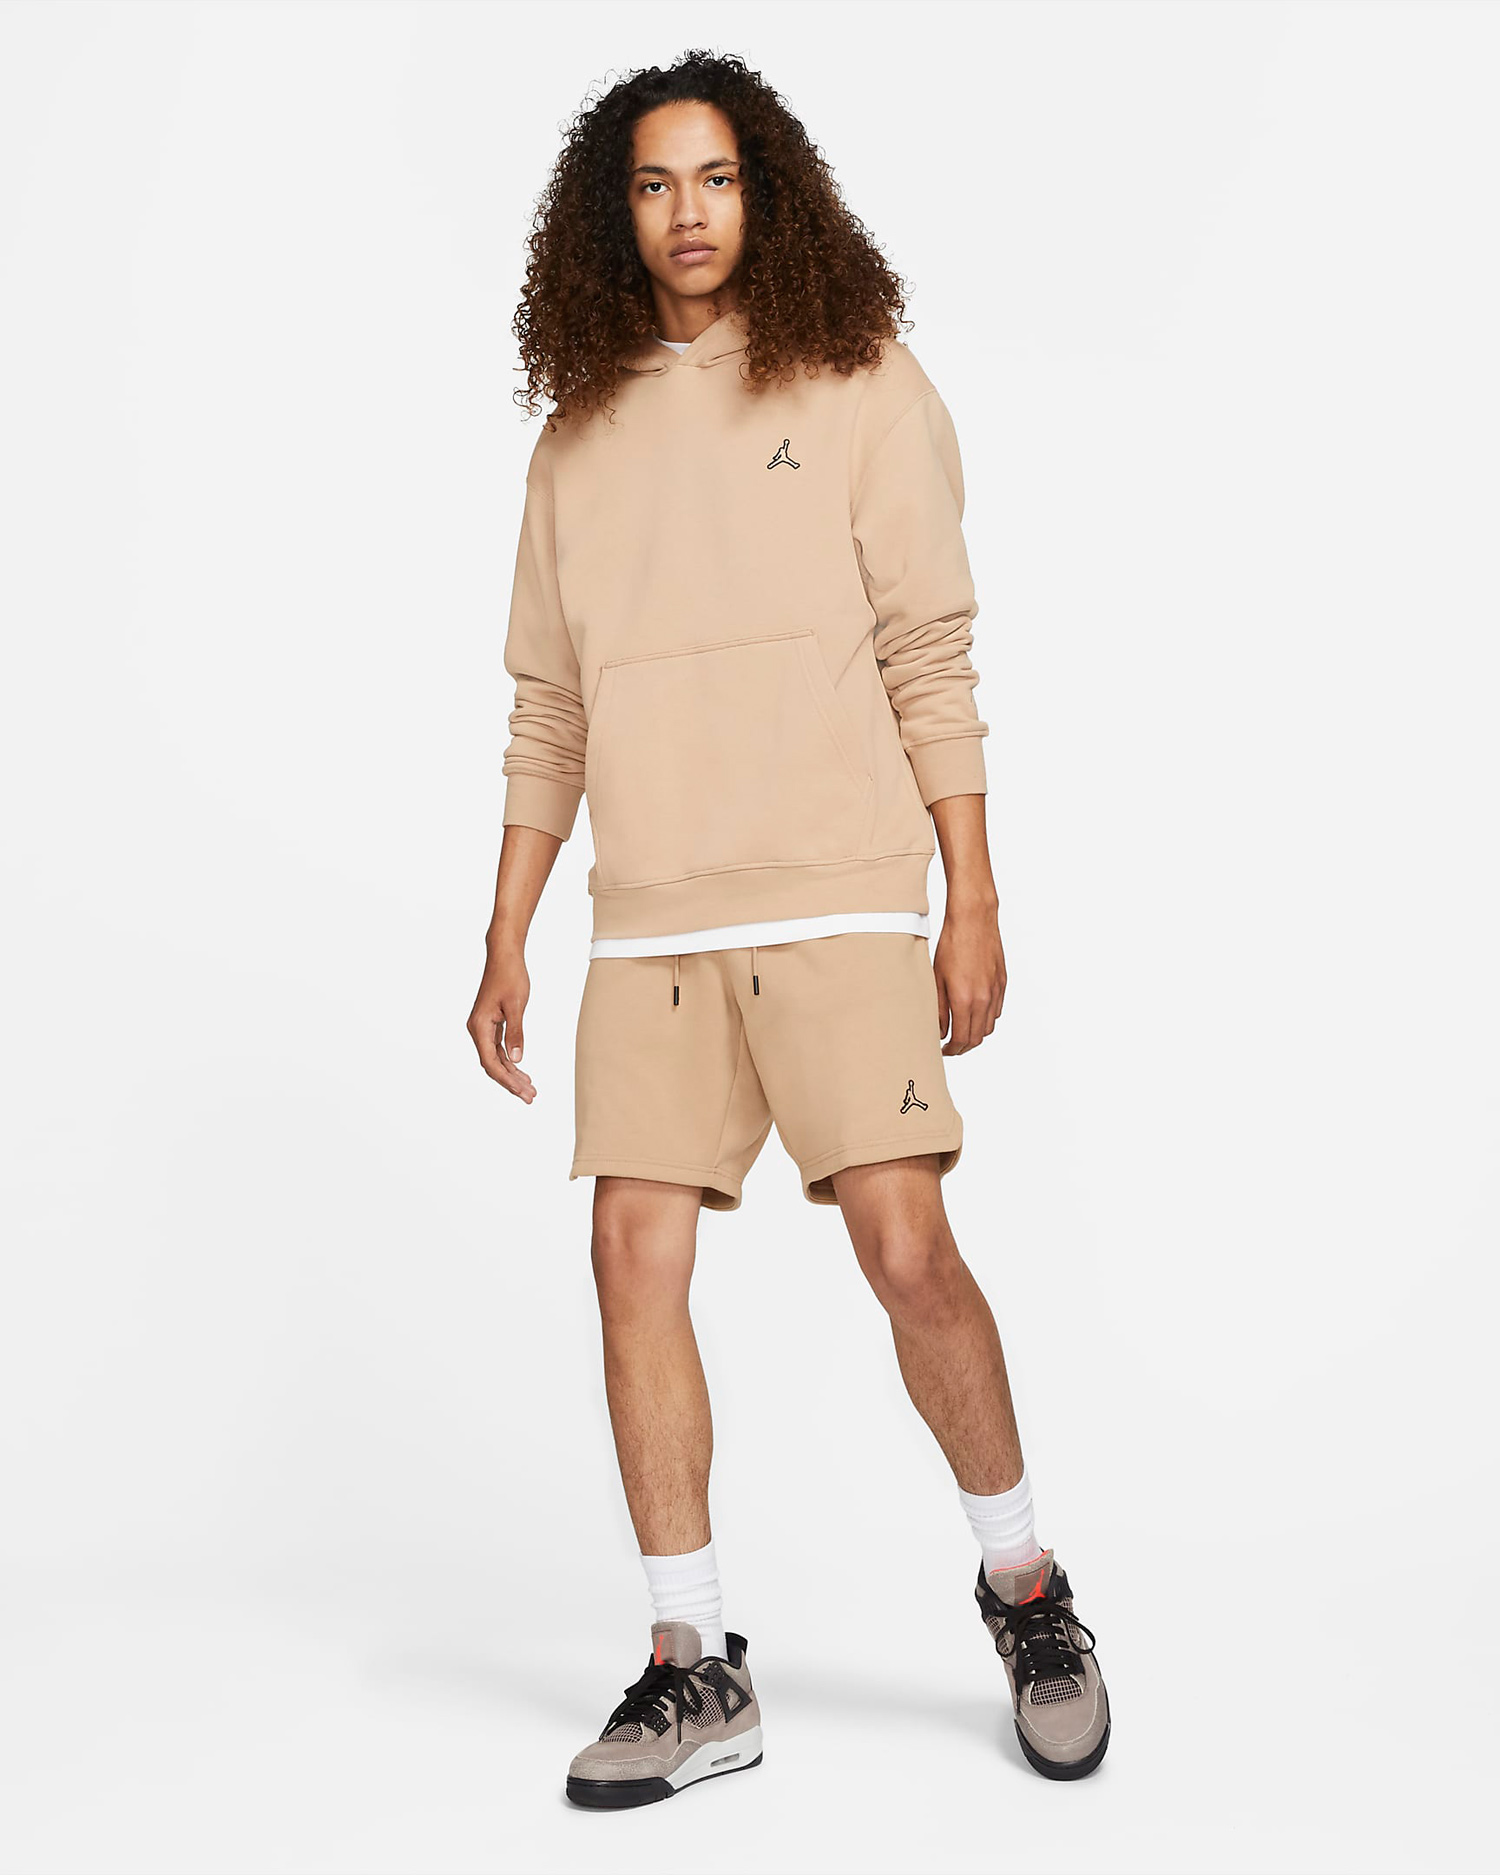 jordan-hemp-hoodie-shorts-outfit